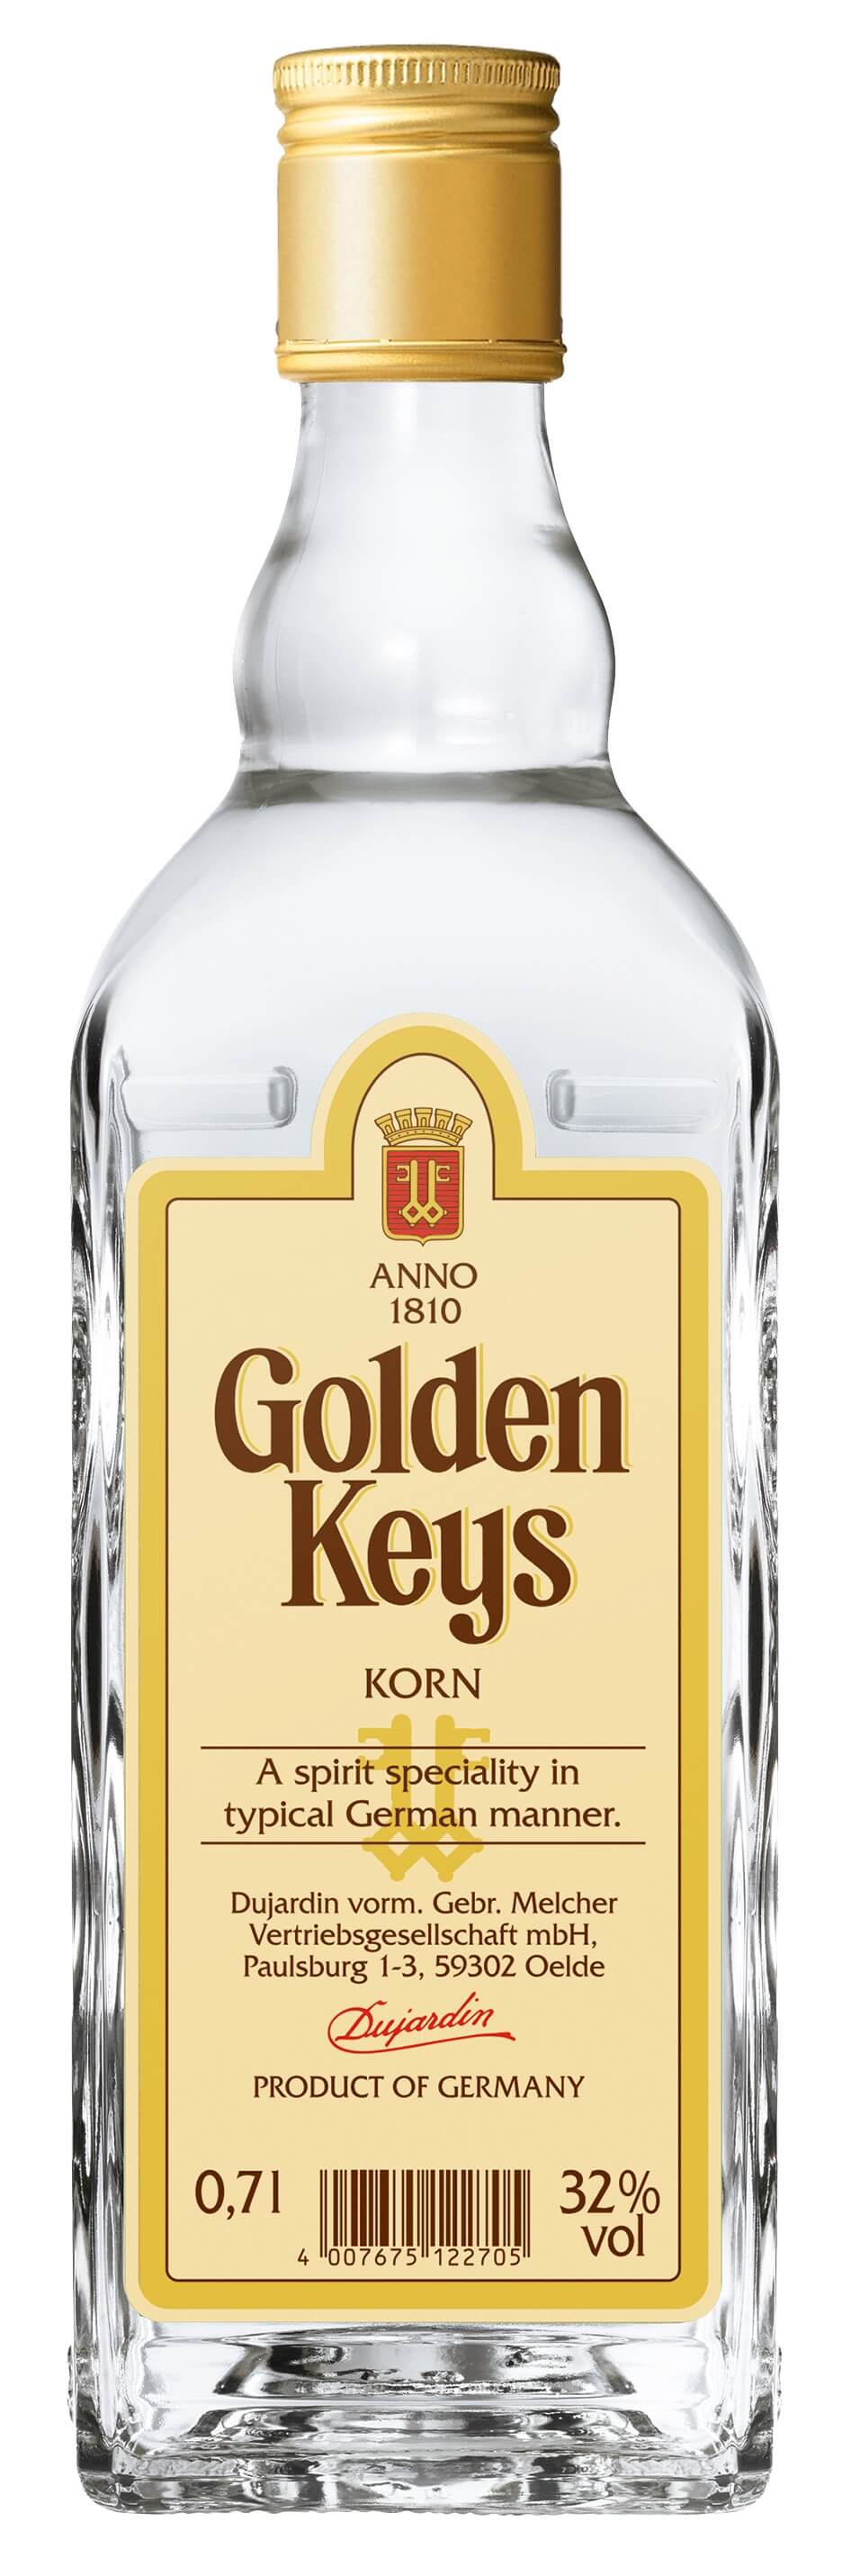 Golden Keys Korn 32%vol. 0,7L